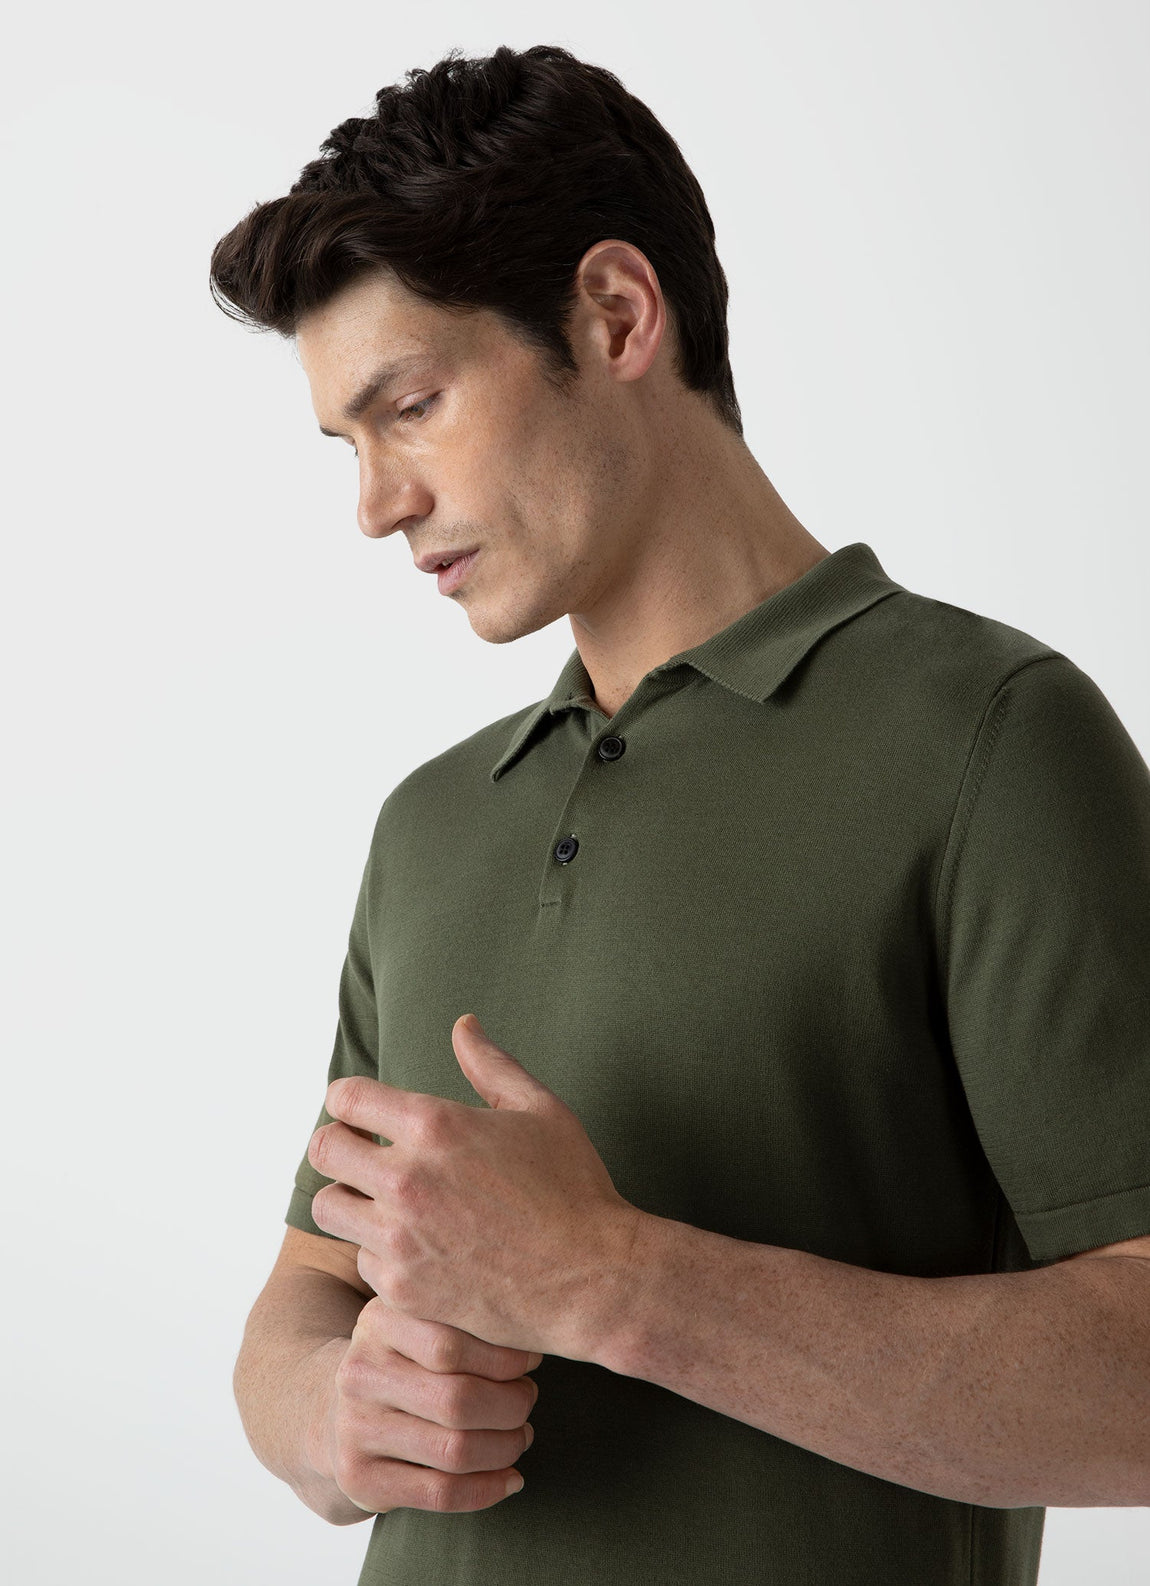 Lululemon Evolution Short Sleeve Polo Shirt *Pique Fabric